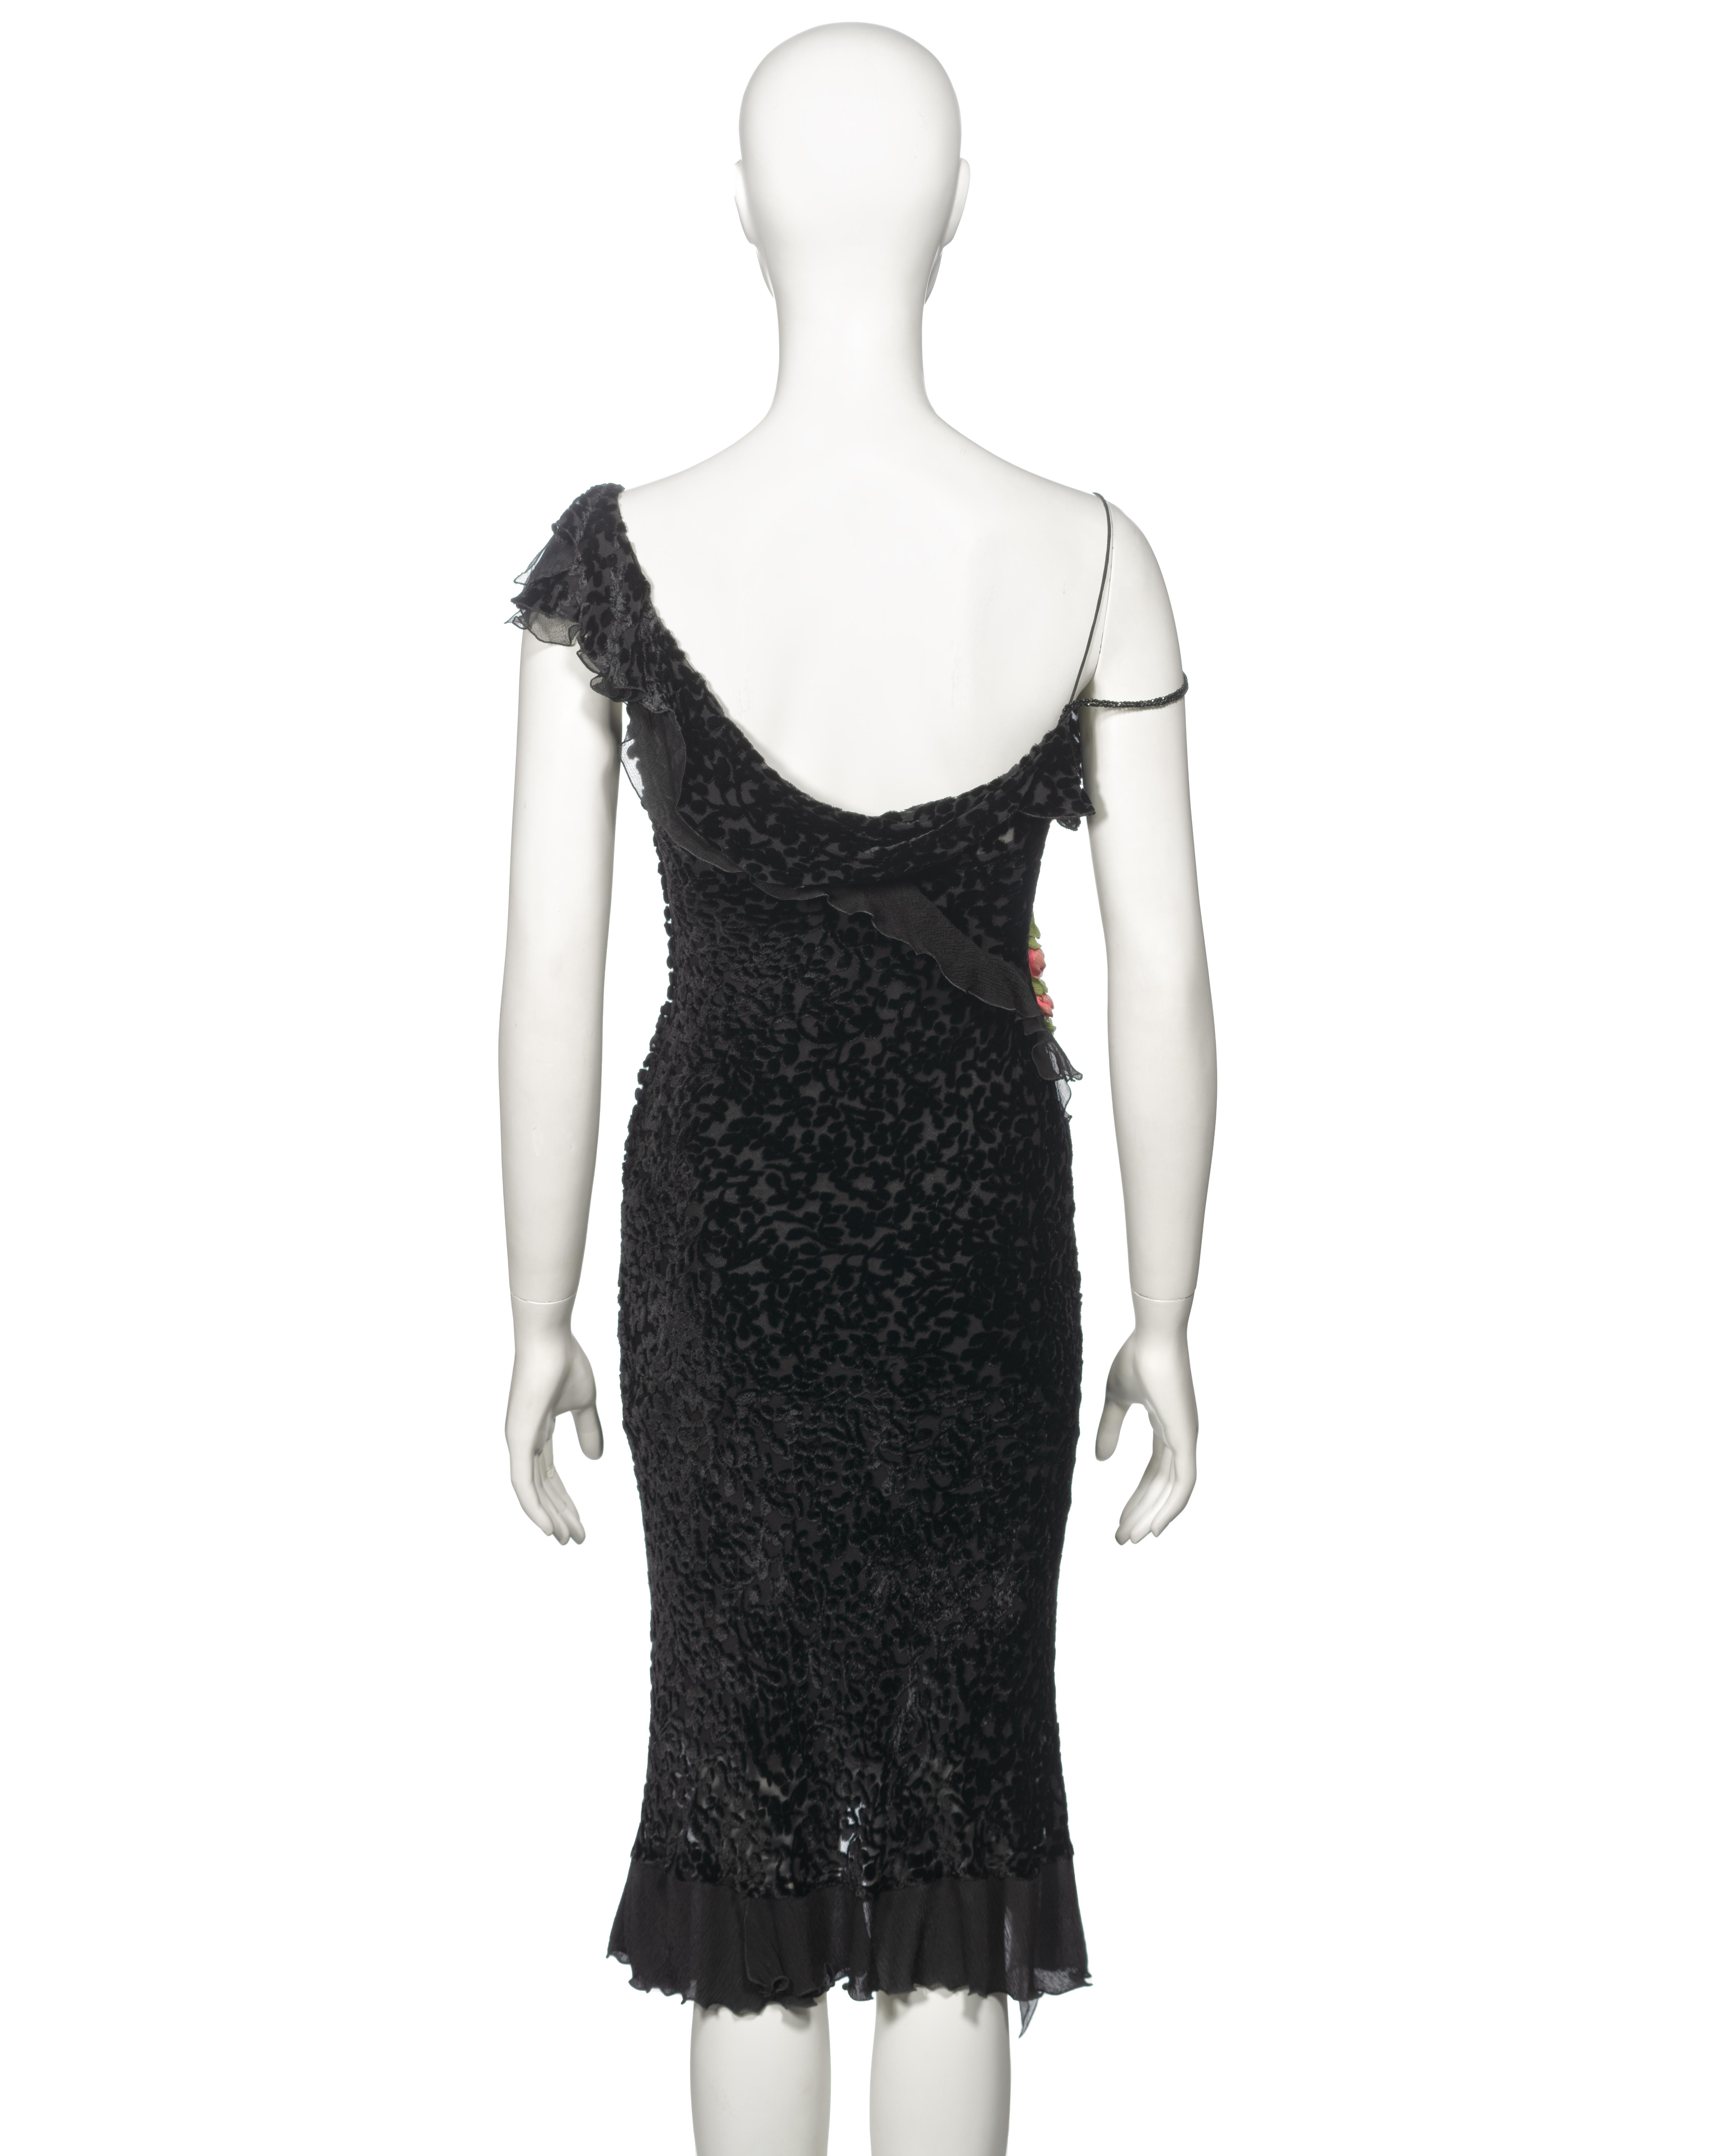 Christian Dior by John Galliano black devoré velvet cocktail dress, fw 2003 For Sale 5